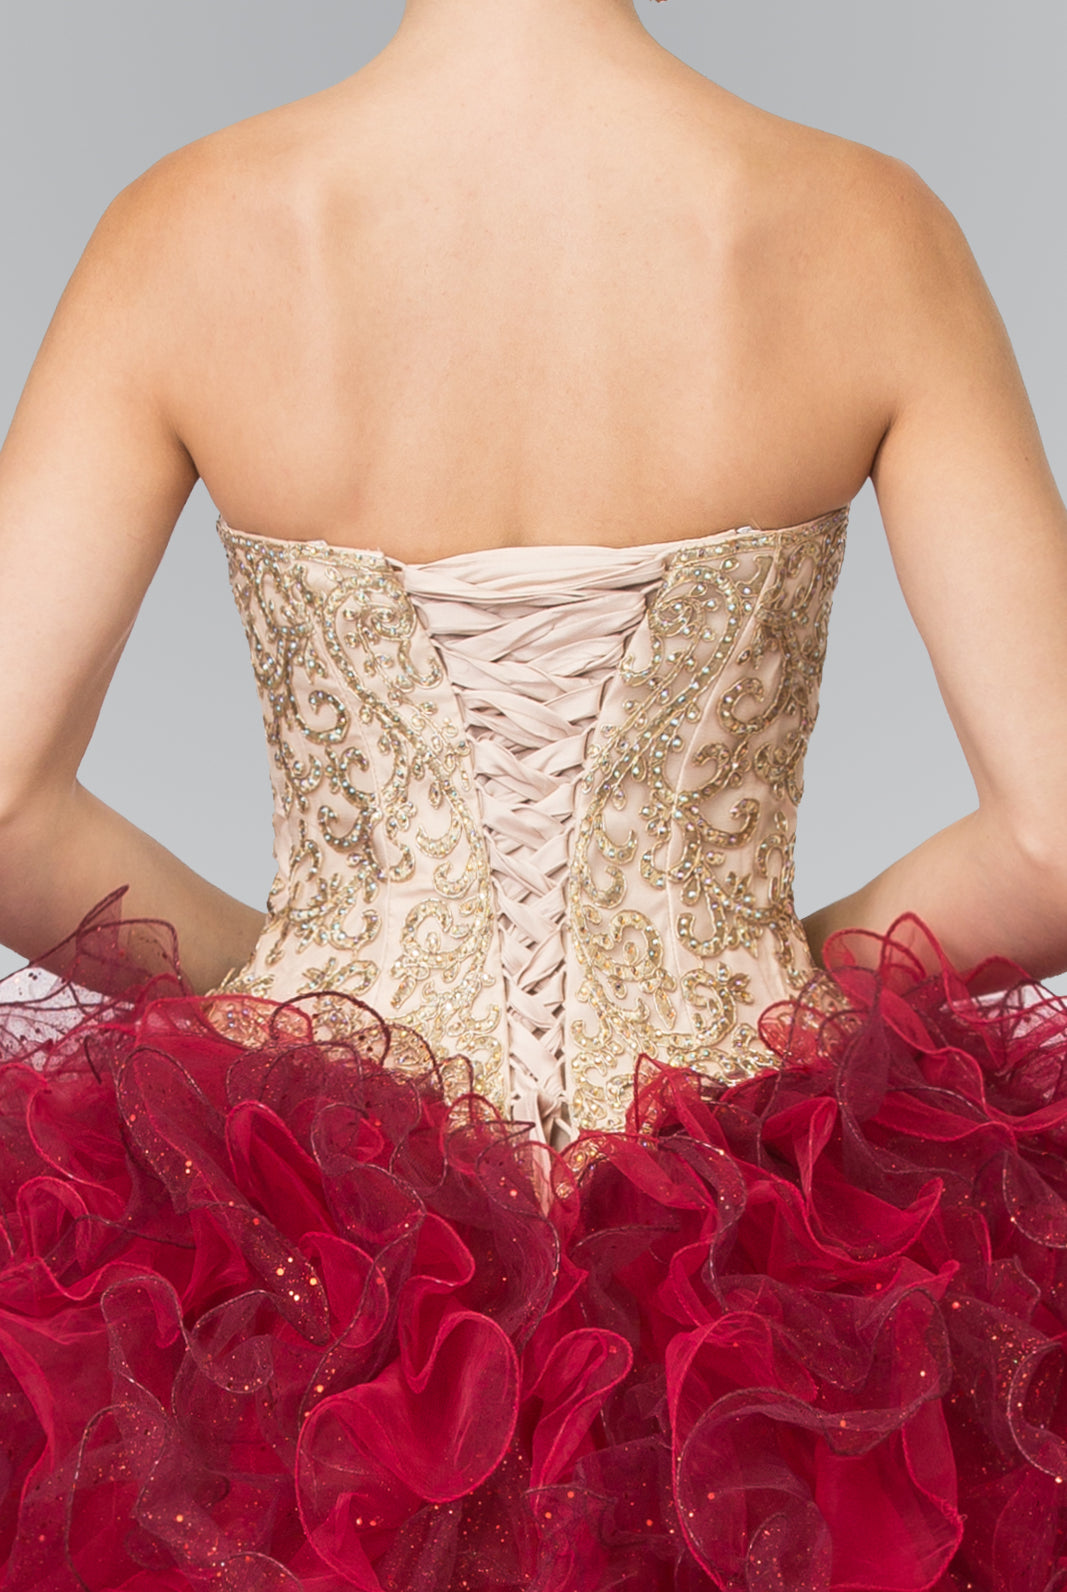 Tulle Ruffled Quinceanera Dress with Bolero-smcdress